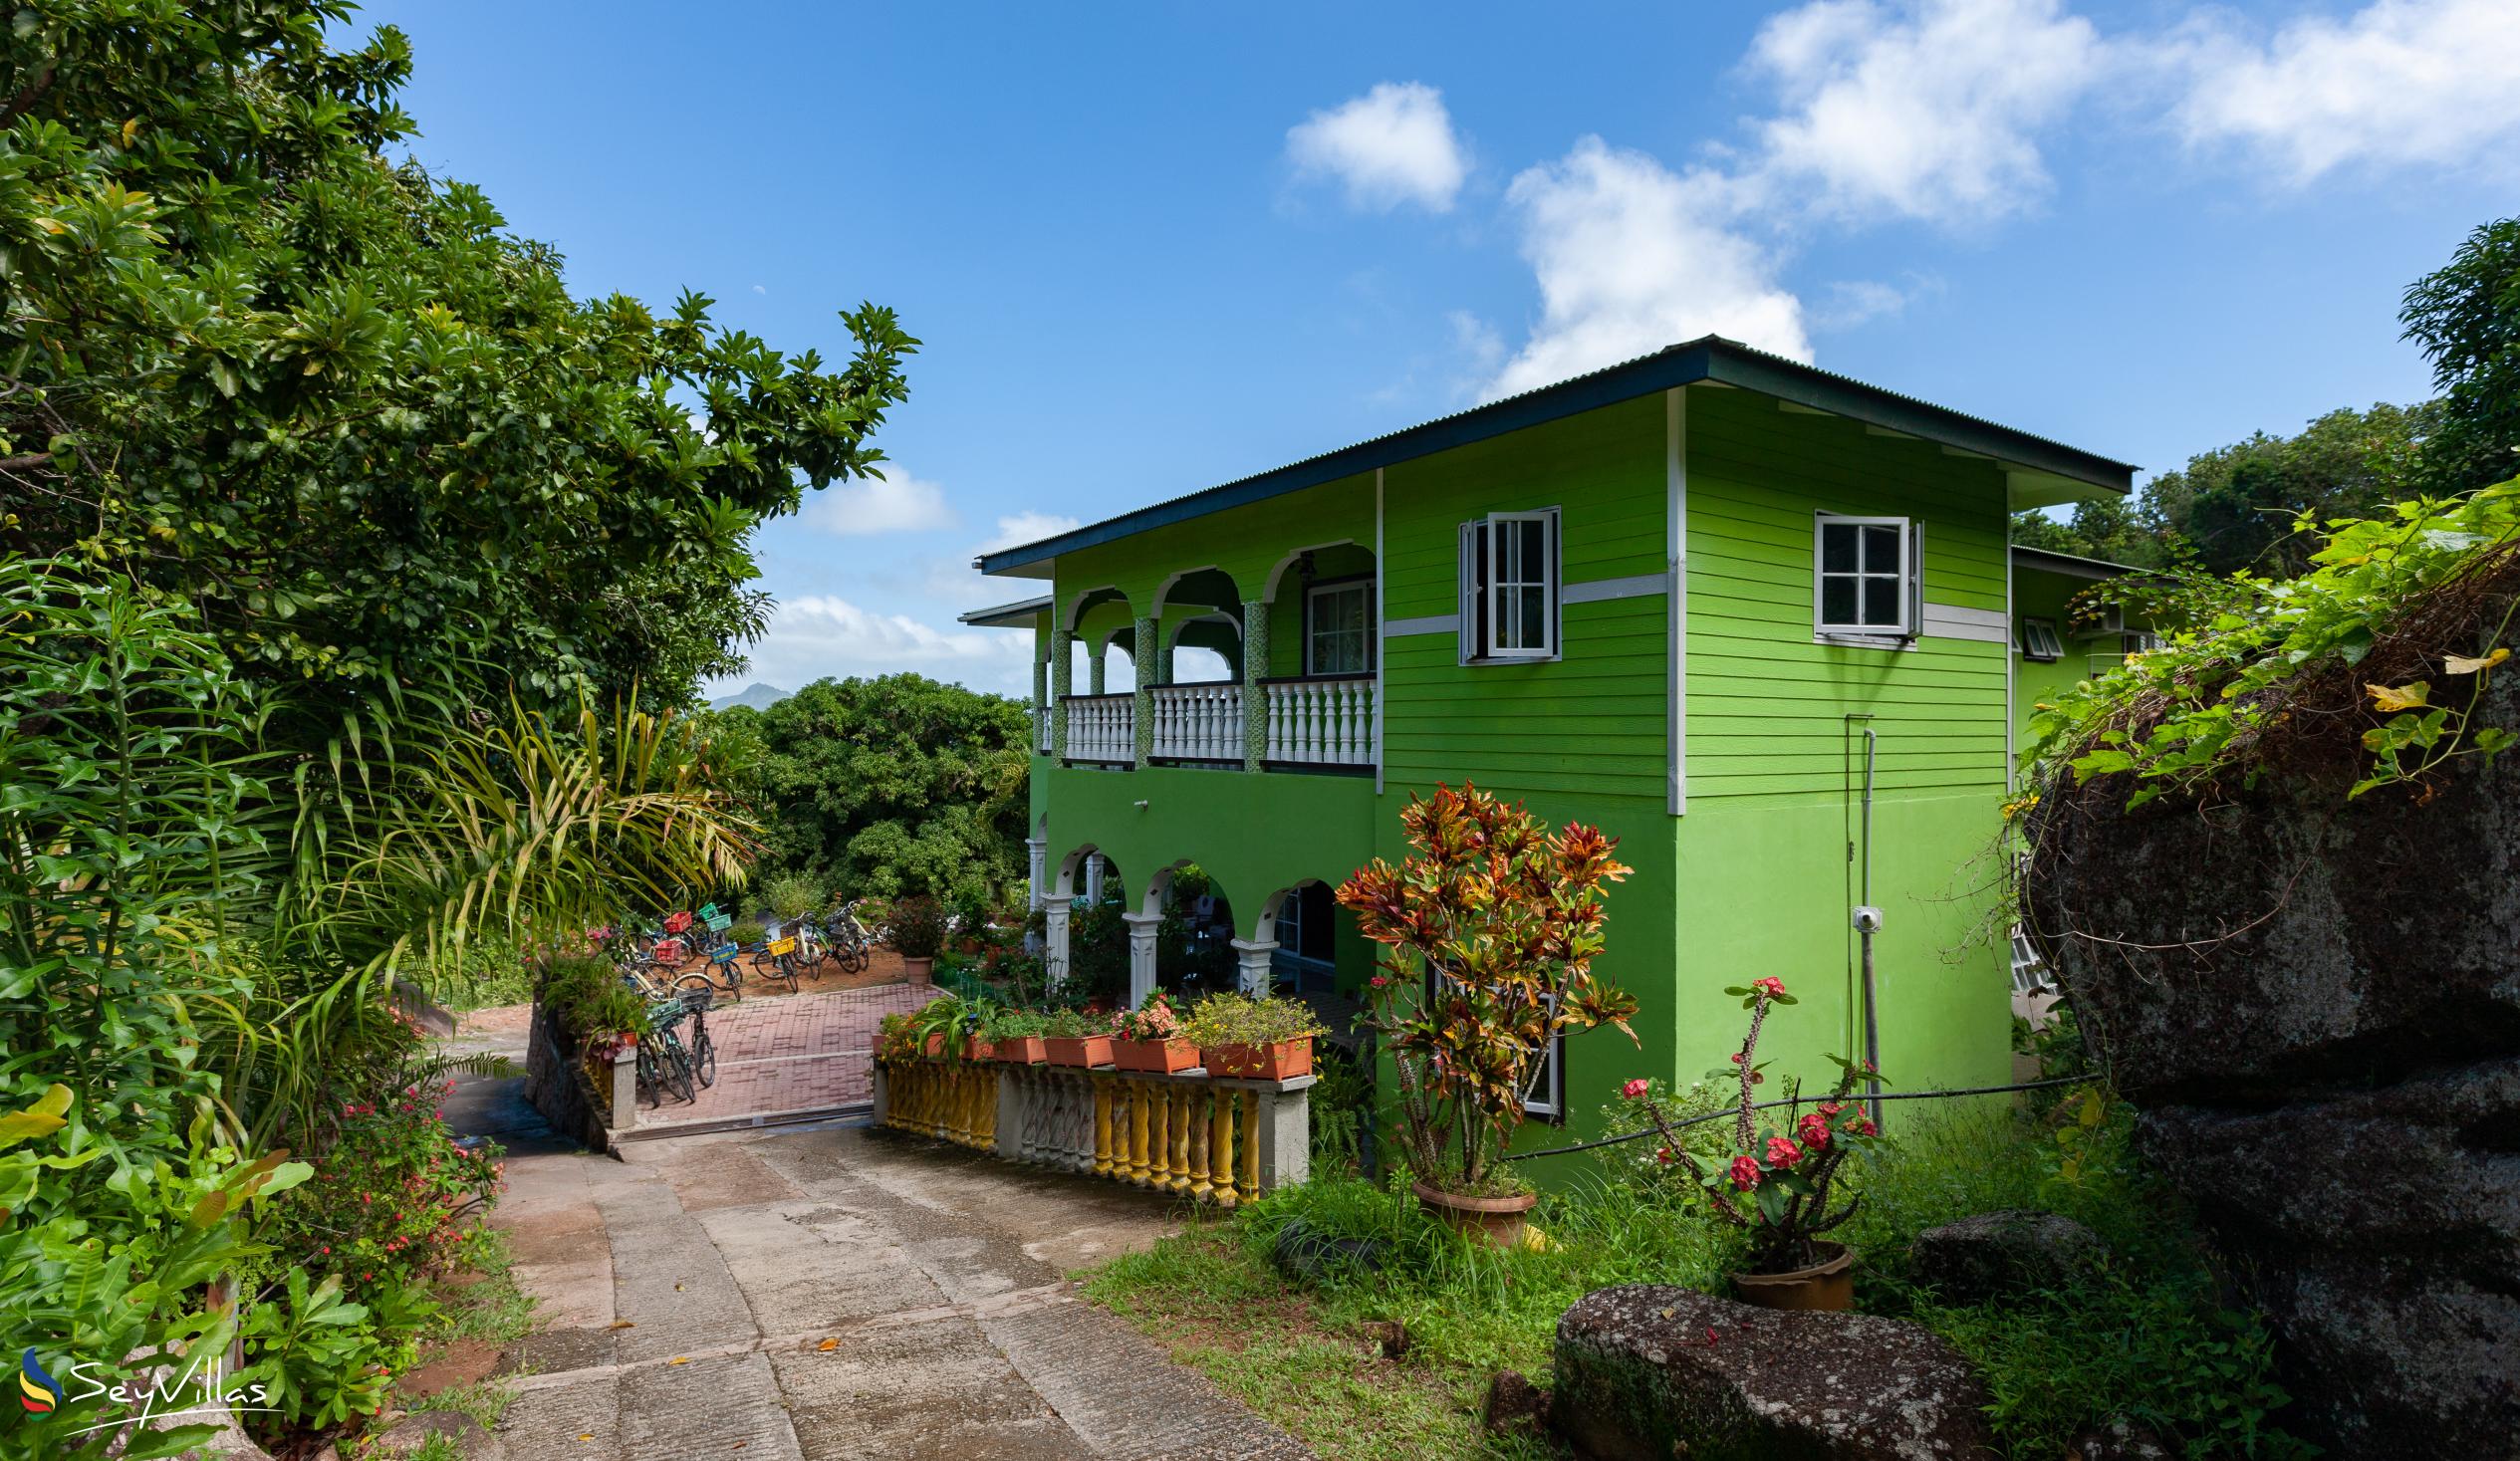 Foto 13: Villa Hortensia - Aussenbereich - La Digue (Seychellen)